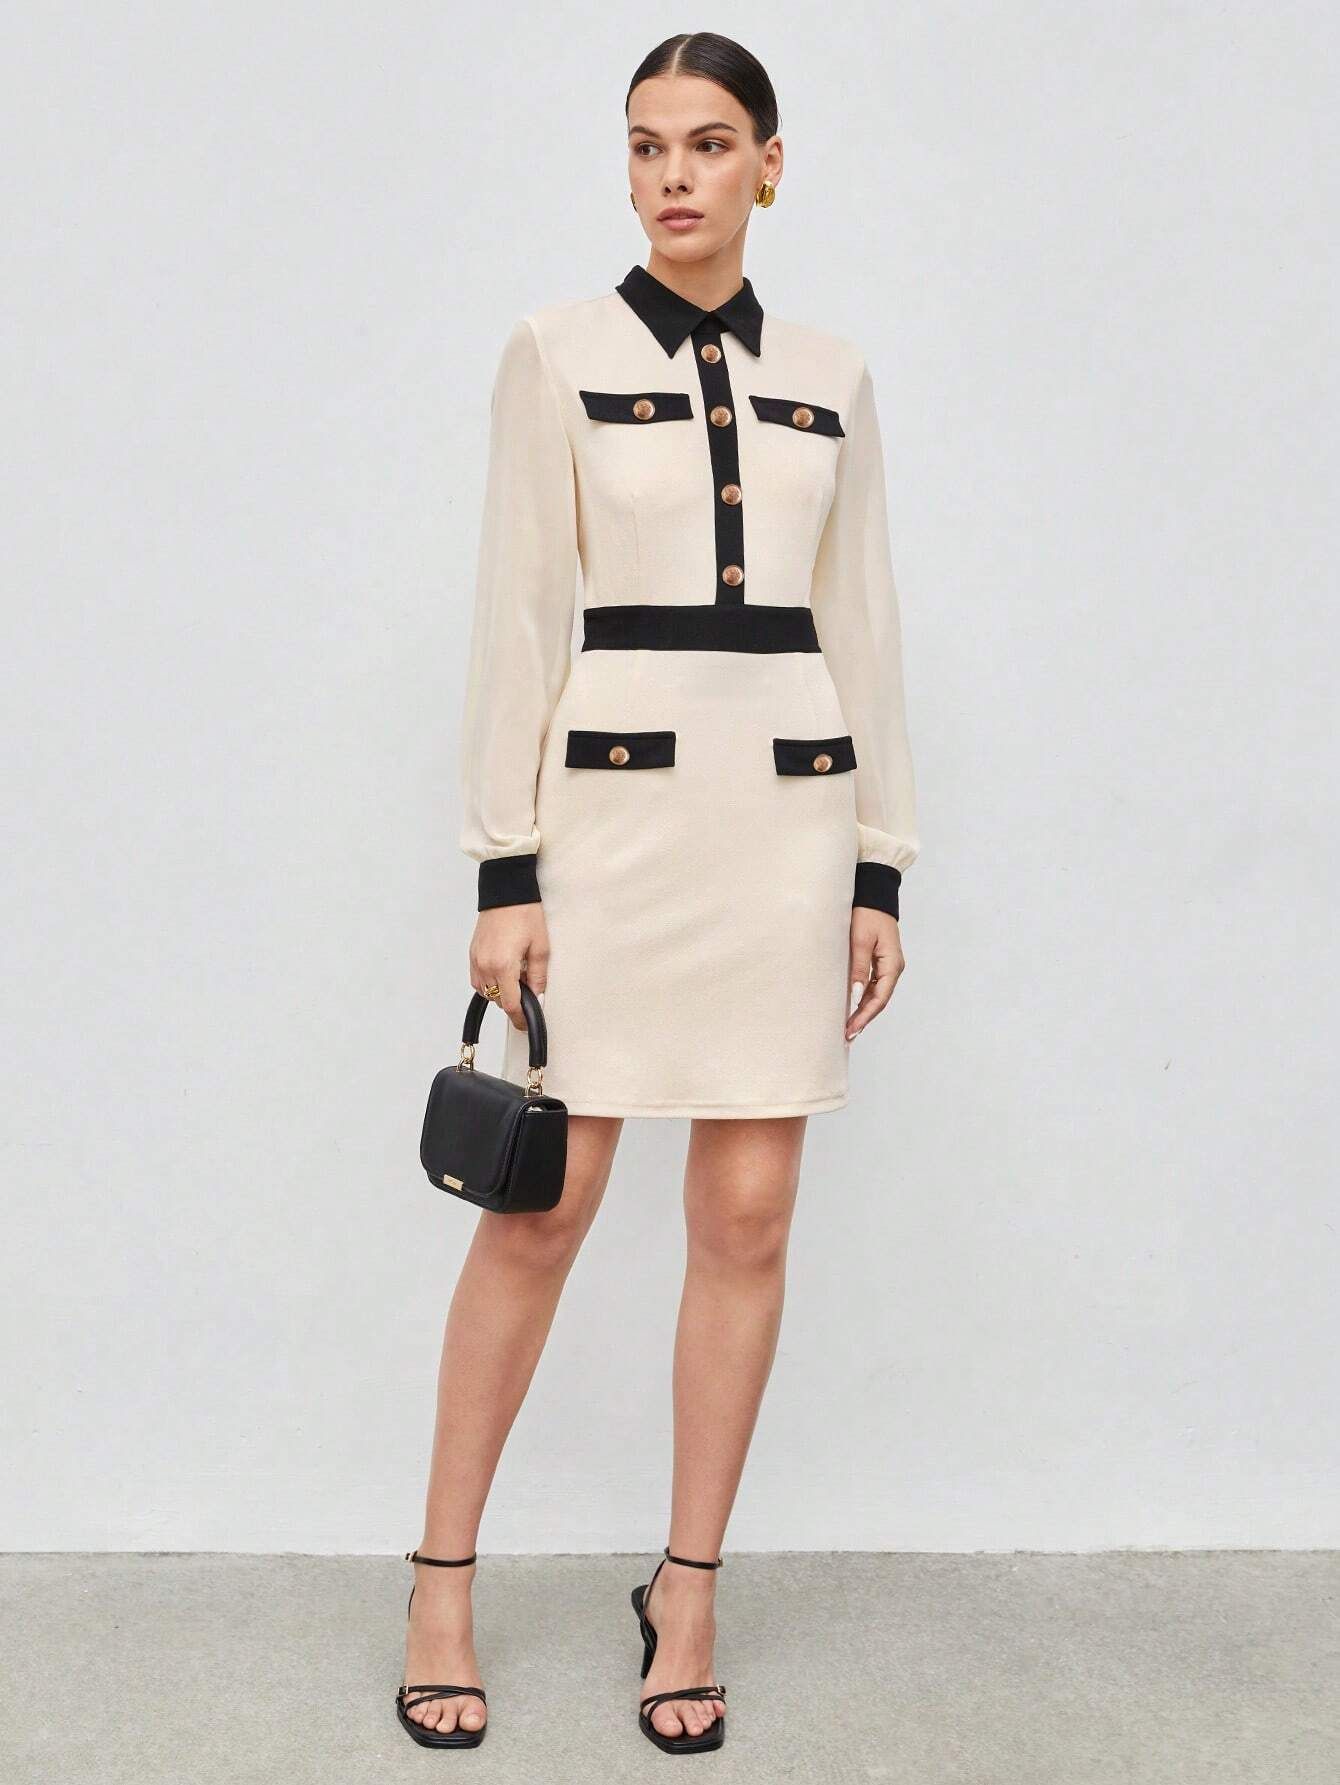 SHEIN BIZwear Contrast Trim Button Front Dress | SHEIN